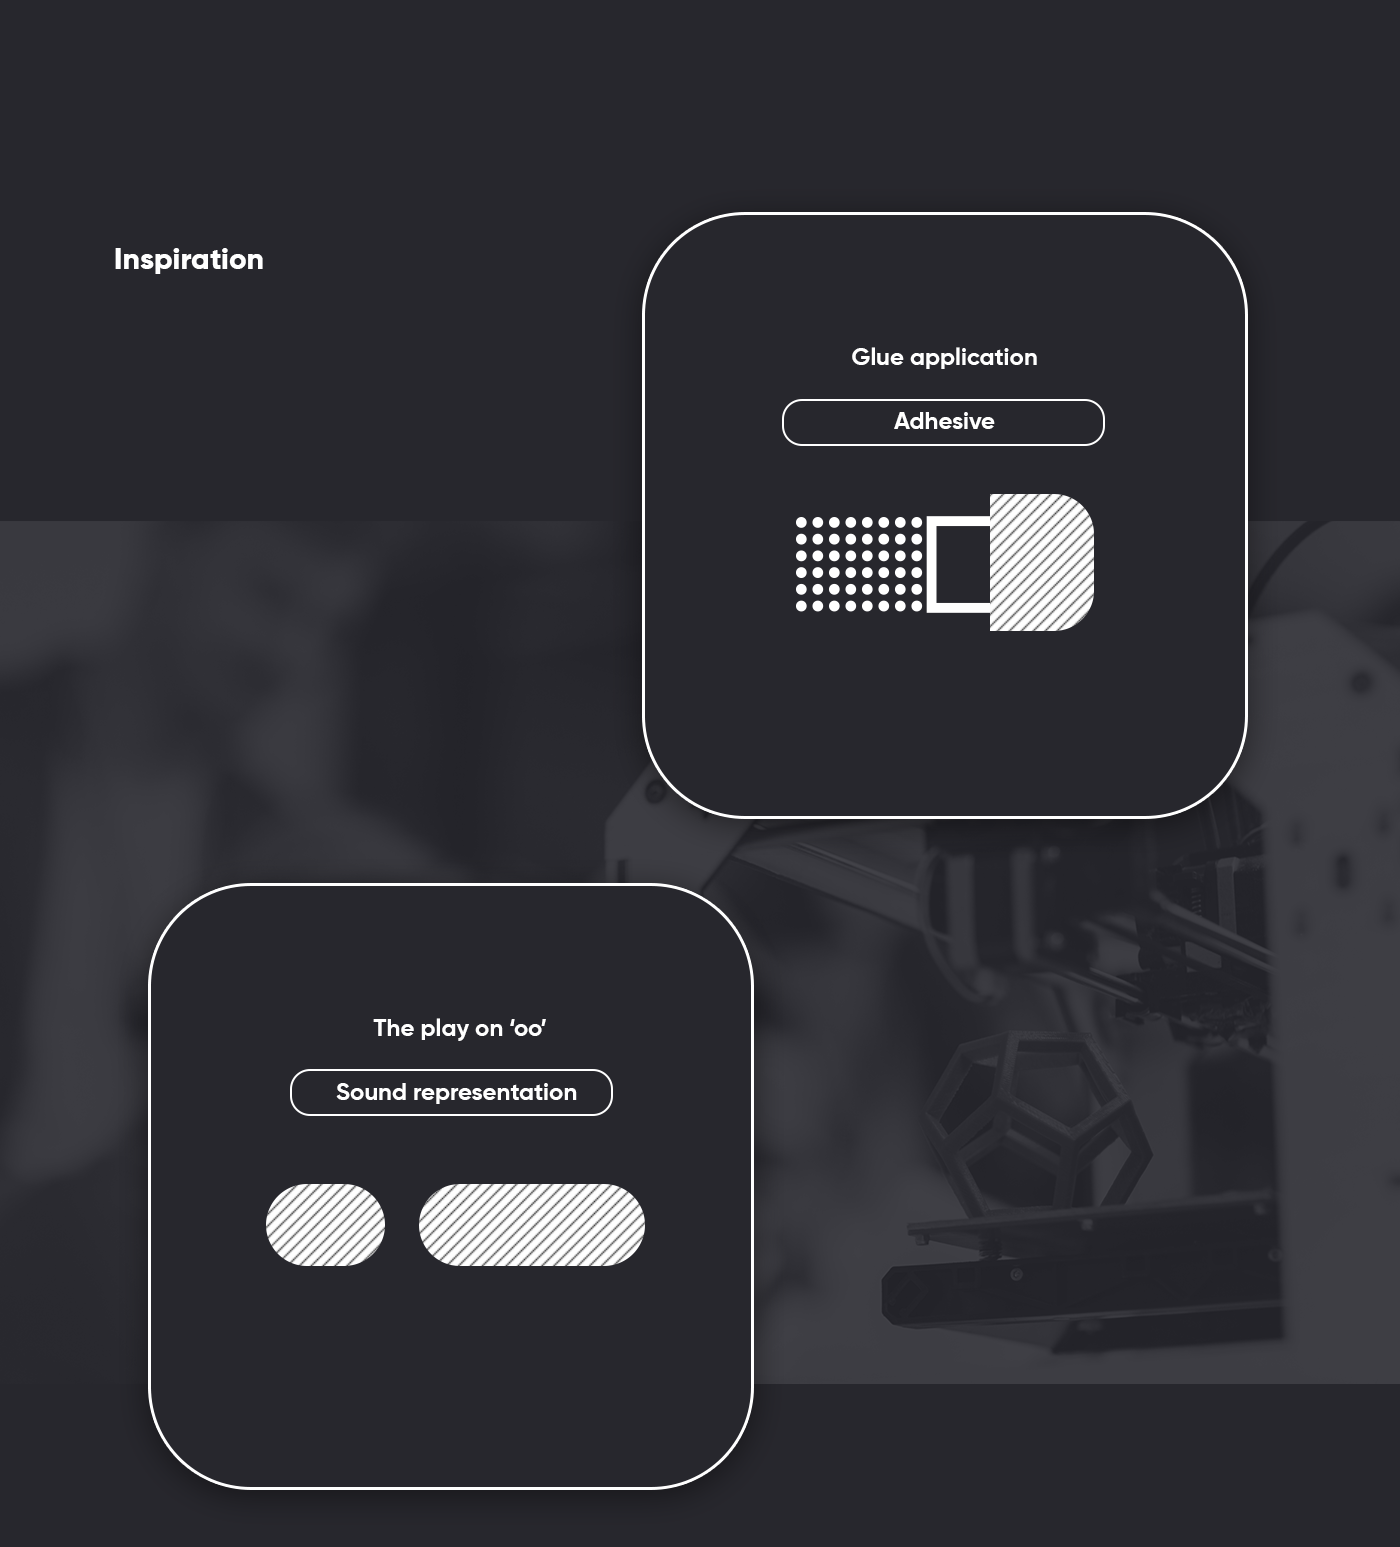 branding  3D Startup product design  Packaging motion graphic design  malta